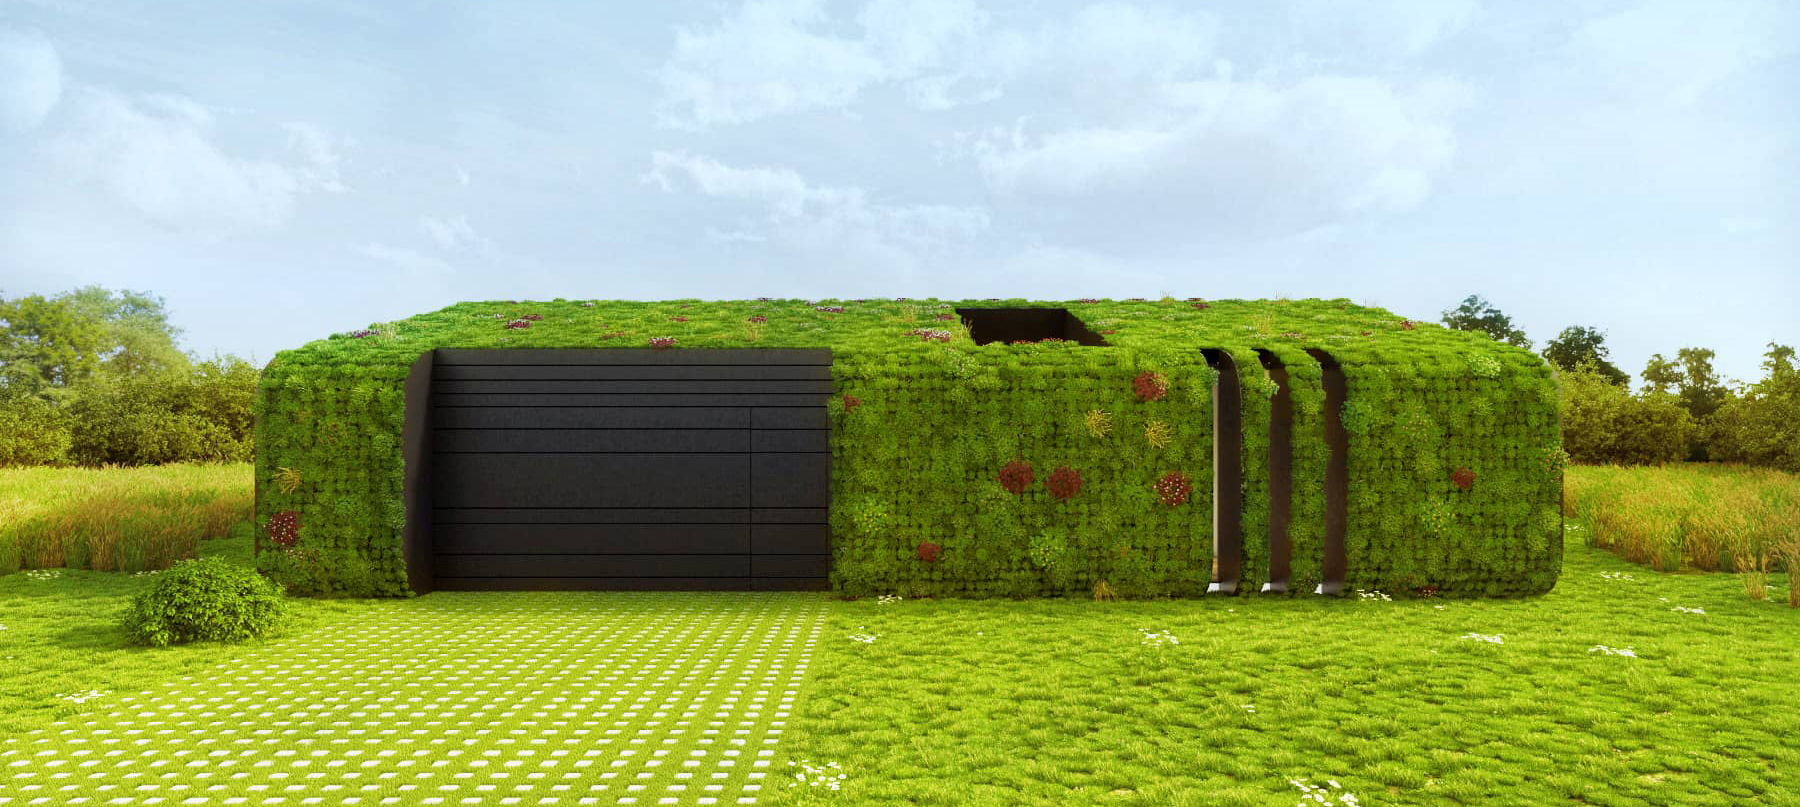 Green Nest House by ON-A - bioarquitectura diseño 100% sostenible casas prefabricadas ecológicas de madera arquitectura verde